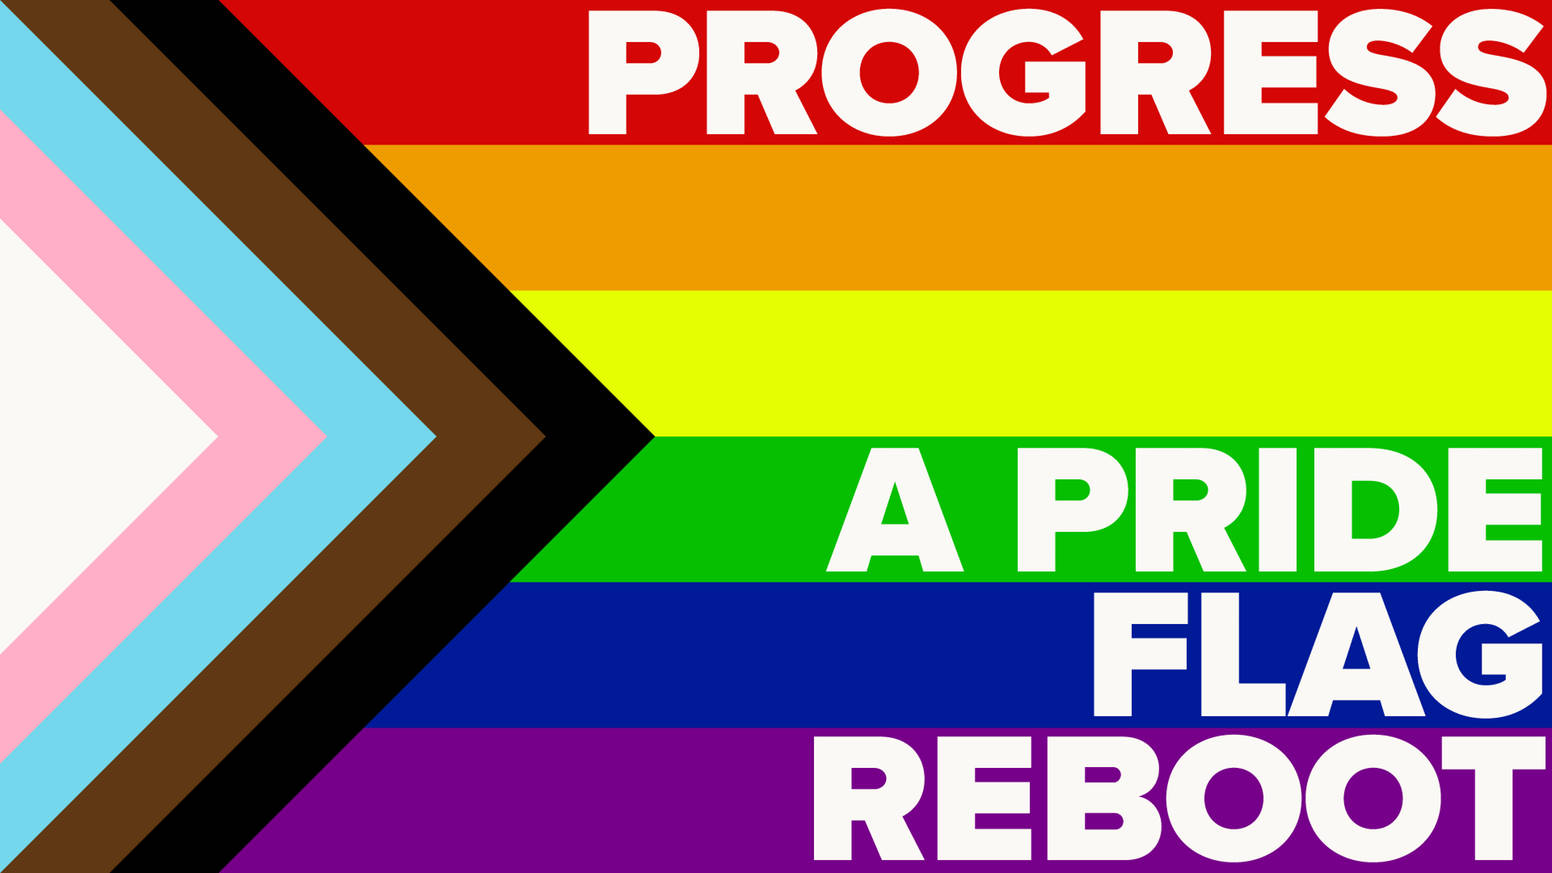 Pride Flag Progress Reboot Background